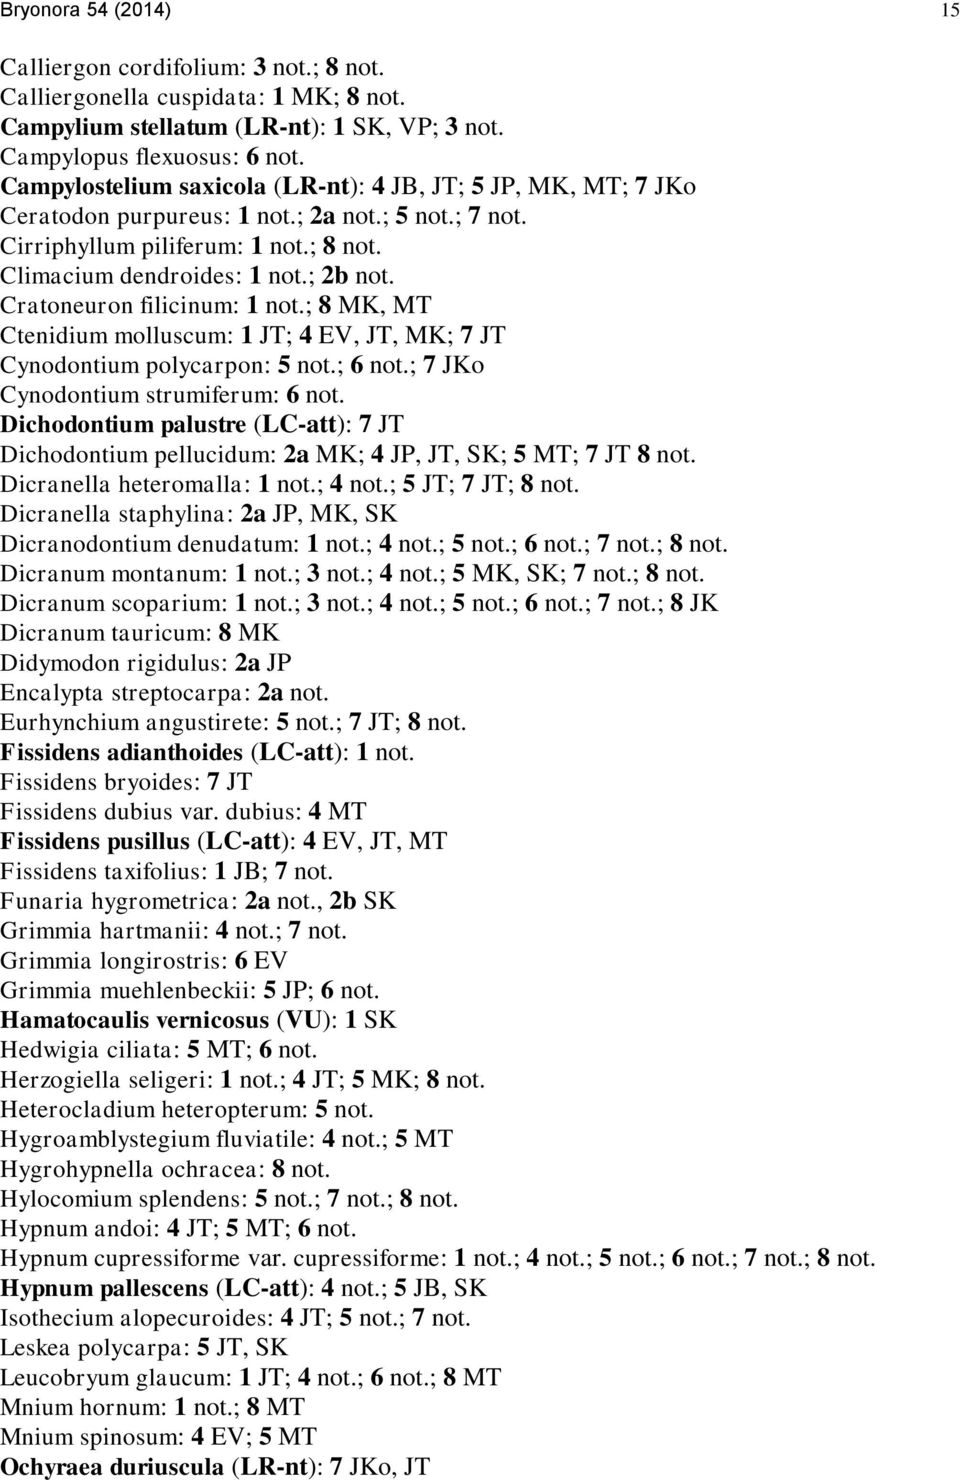 Cratoneuron filicinum: 1 not.; 8 MK, MT Ctenidium molluscum: 1 JT; 4 EV, JT, MK; 7 JT Cynodontium polycarpon: 5 not.; 6 not.; 7 JKo Cynodontium strumiferum: 6 not.